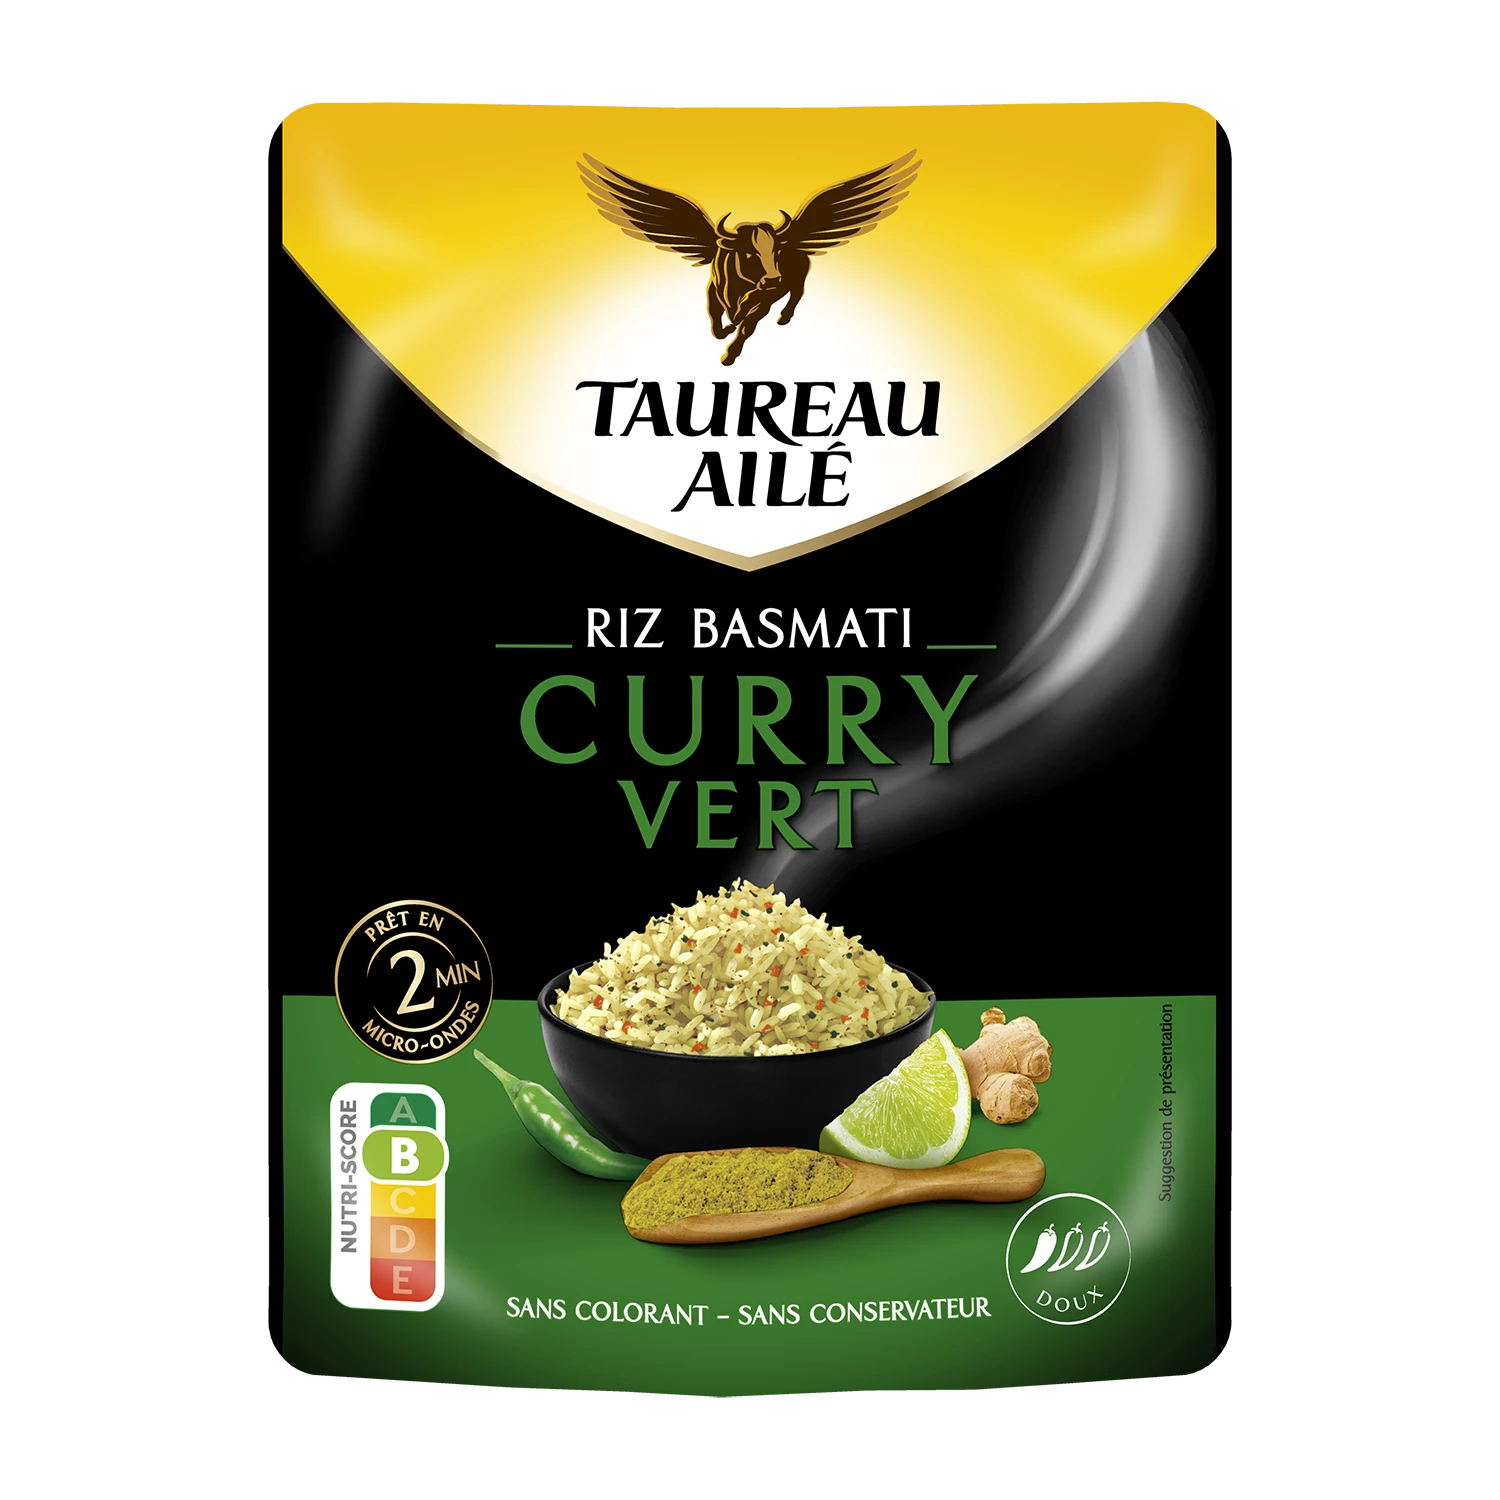 Riz Basmati Curry Vert, 250g - TAUREAU AILE